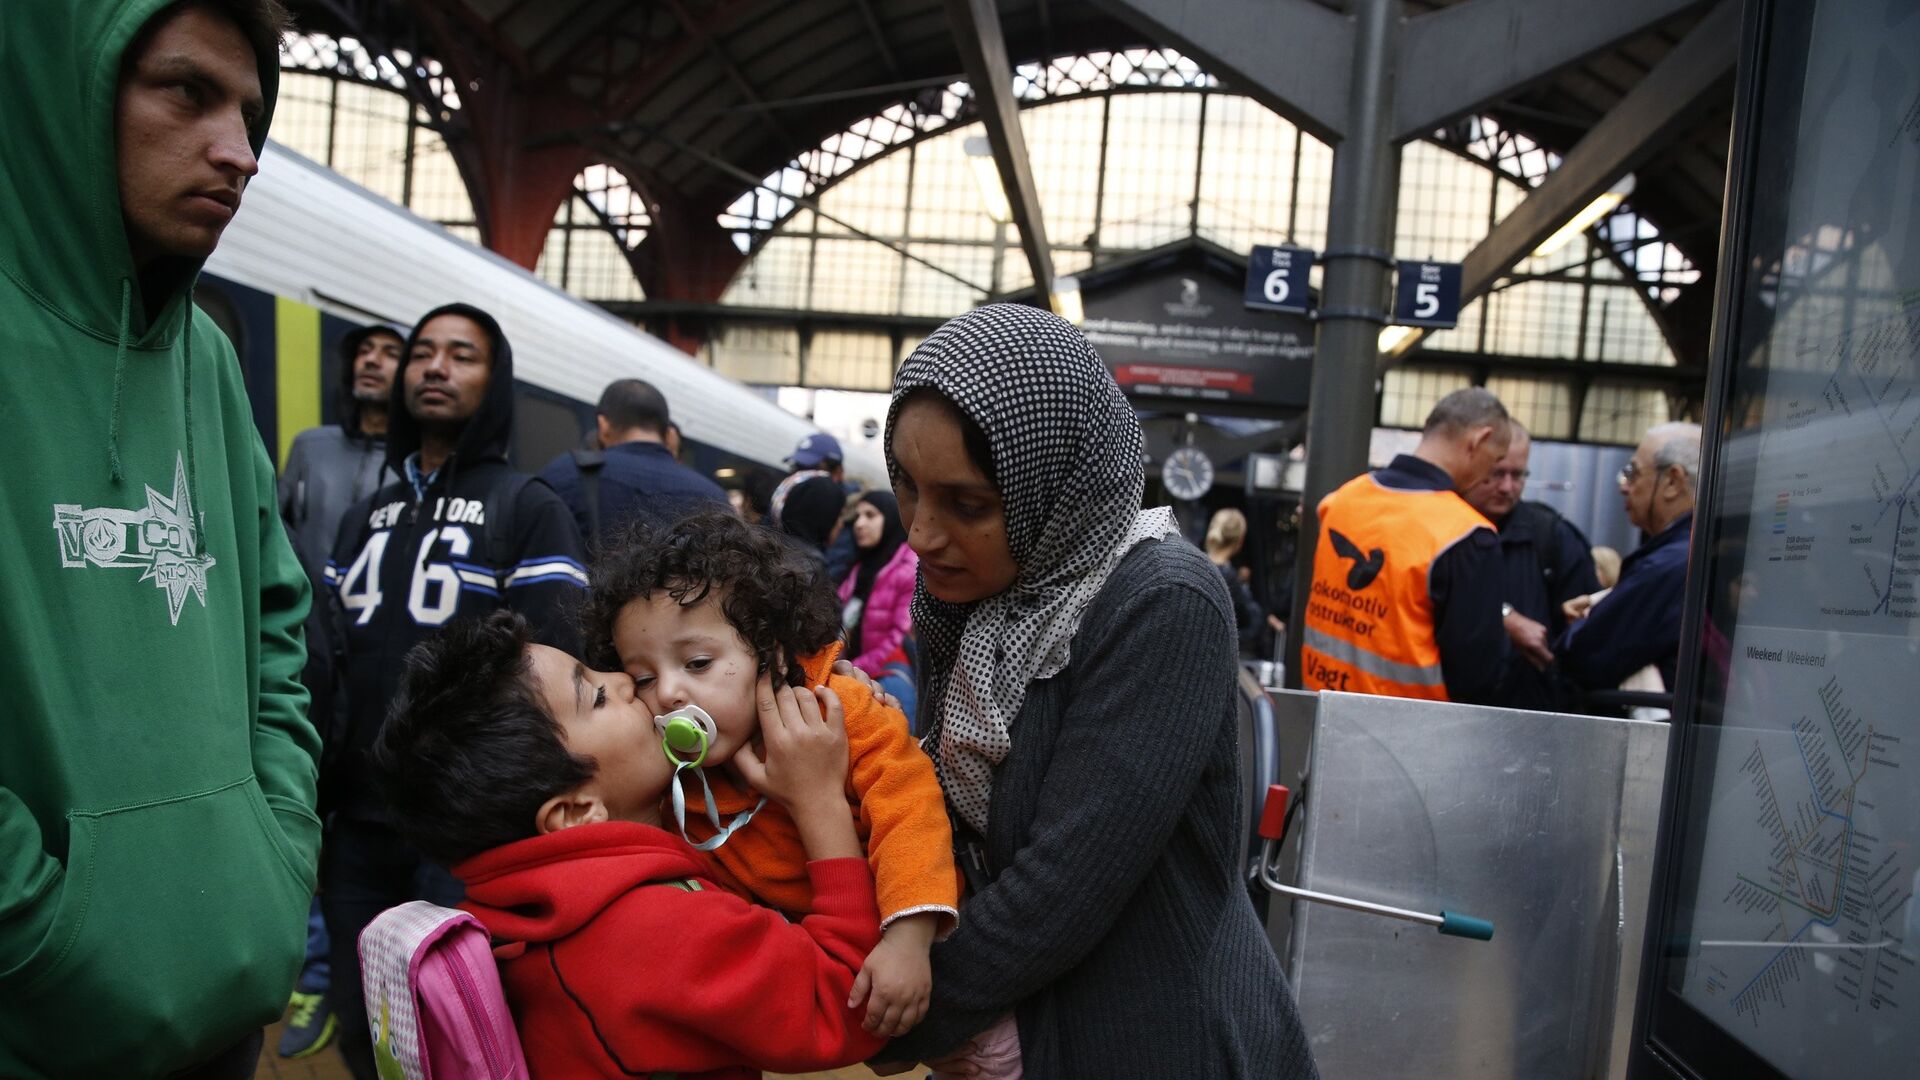 Syrian migrants arrive at main train station in Copenhagen (File) - Sputnik International, 1920, 31.03.2023